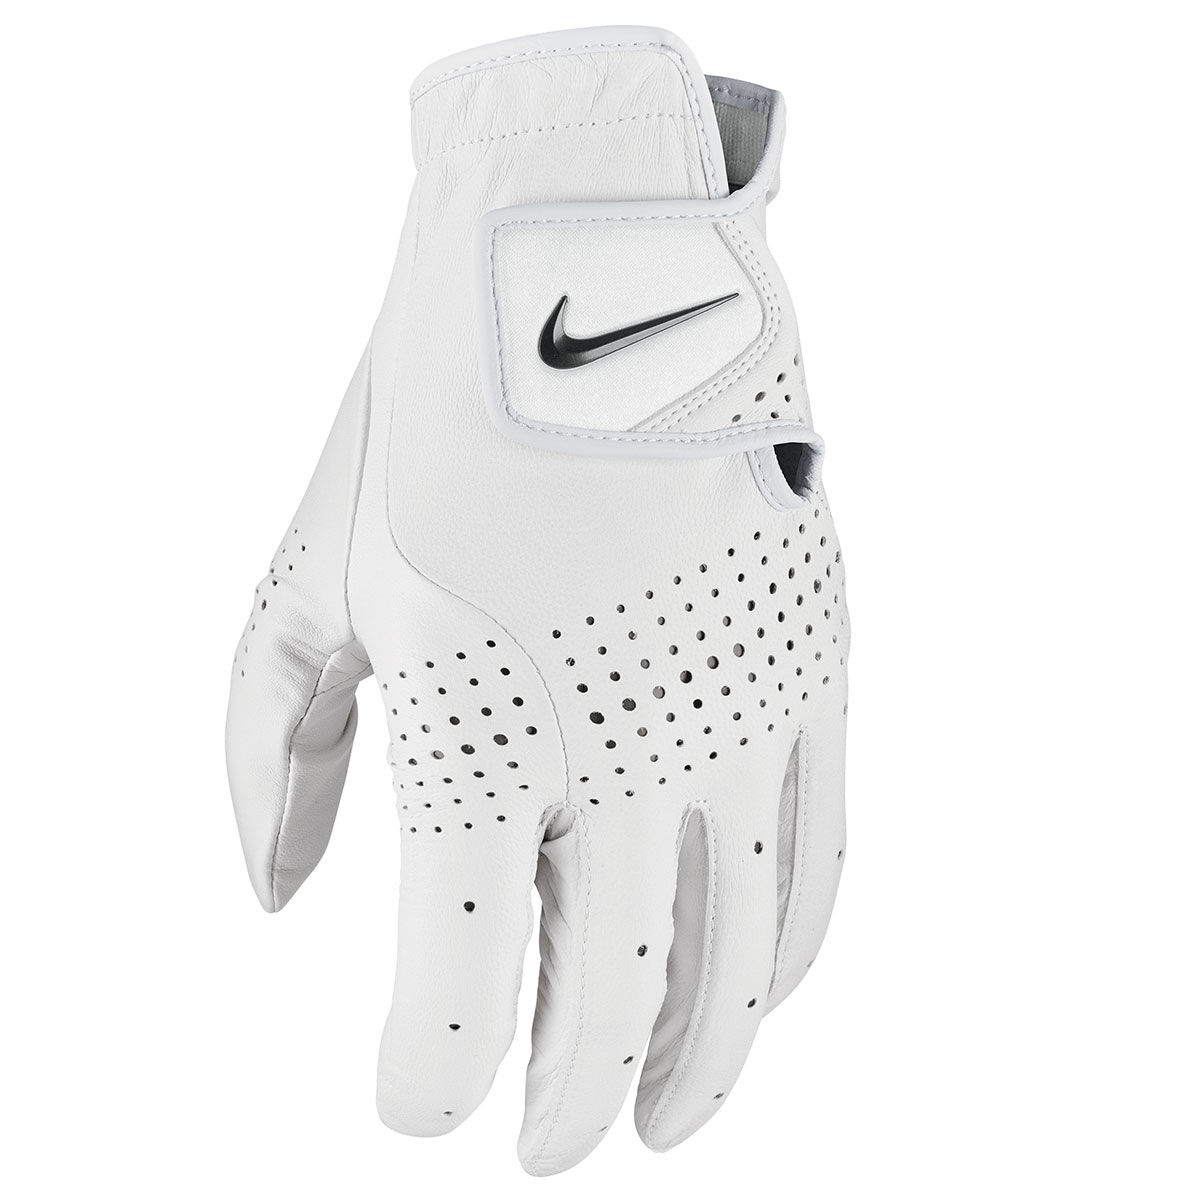 Nike Golf Tour Classic III Glove from 